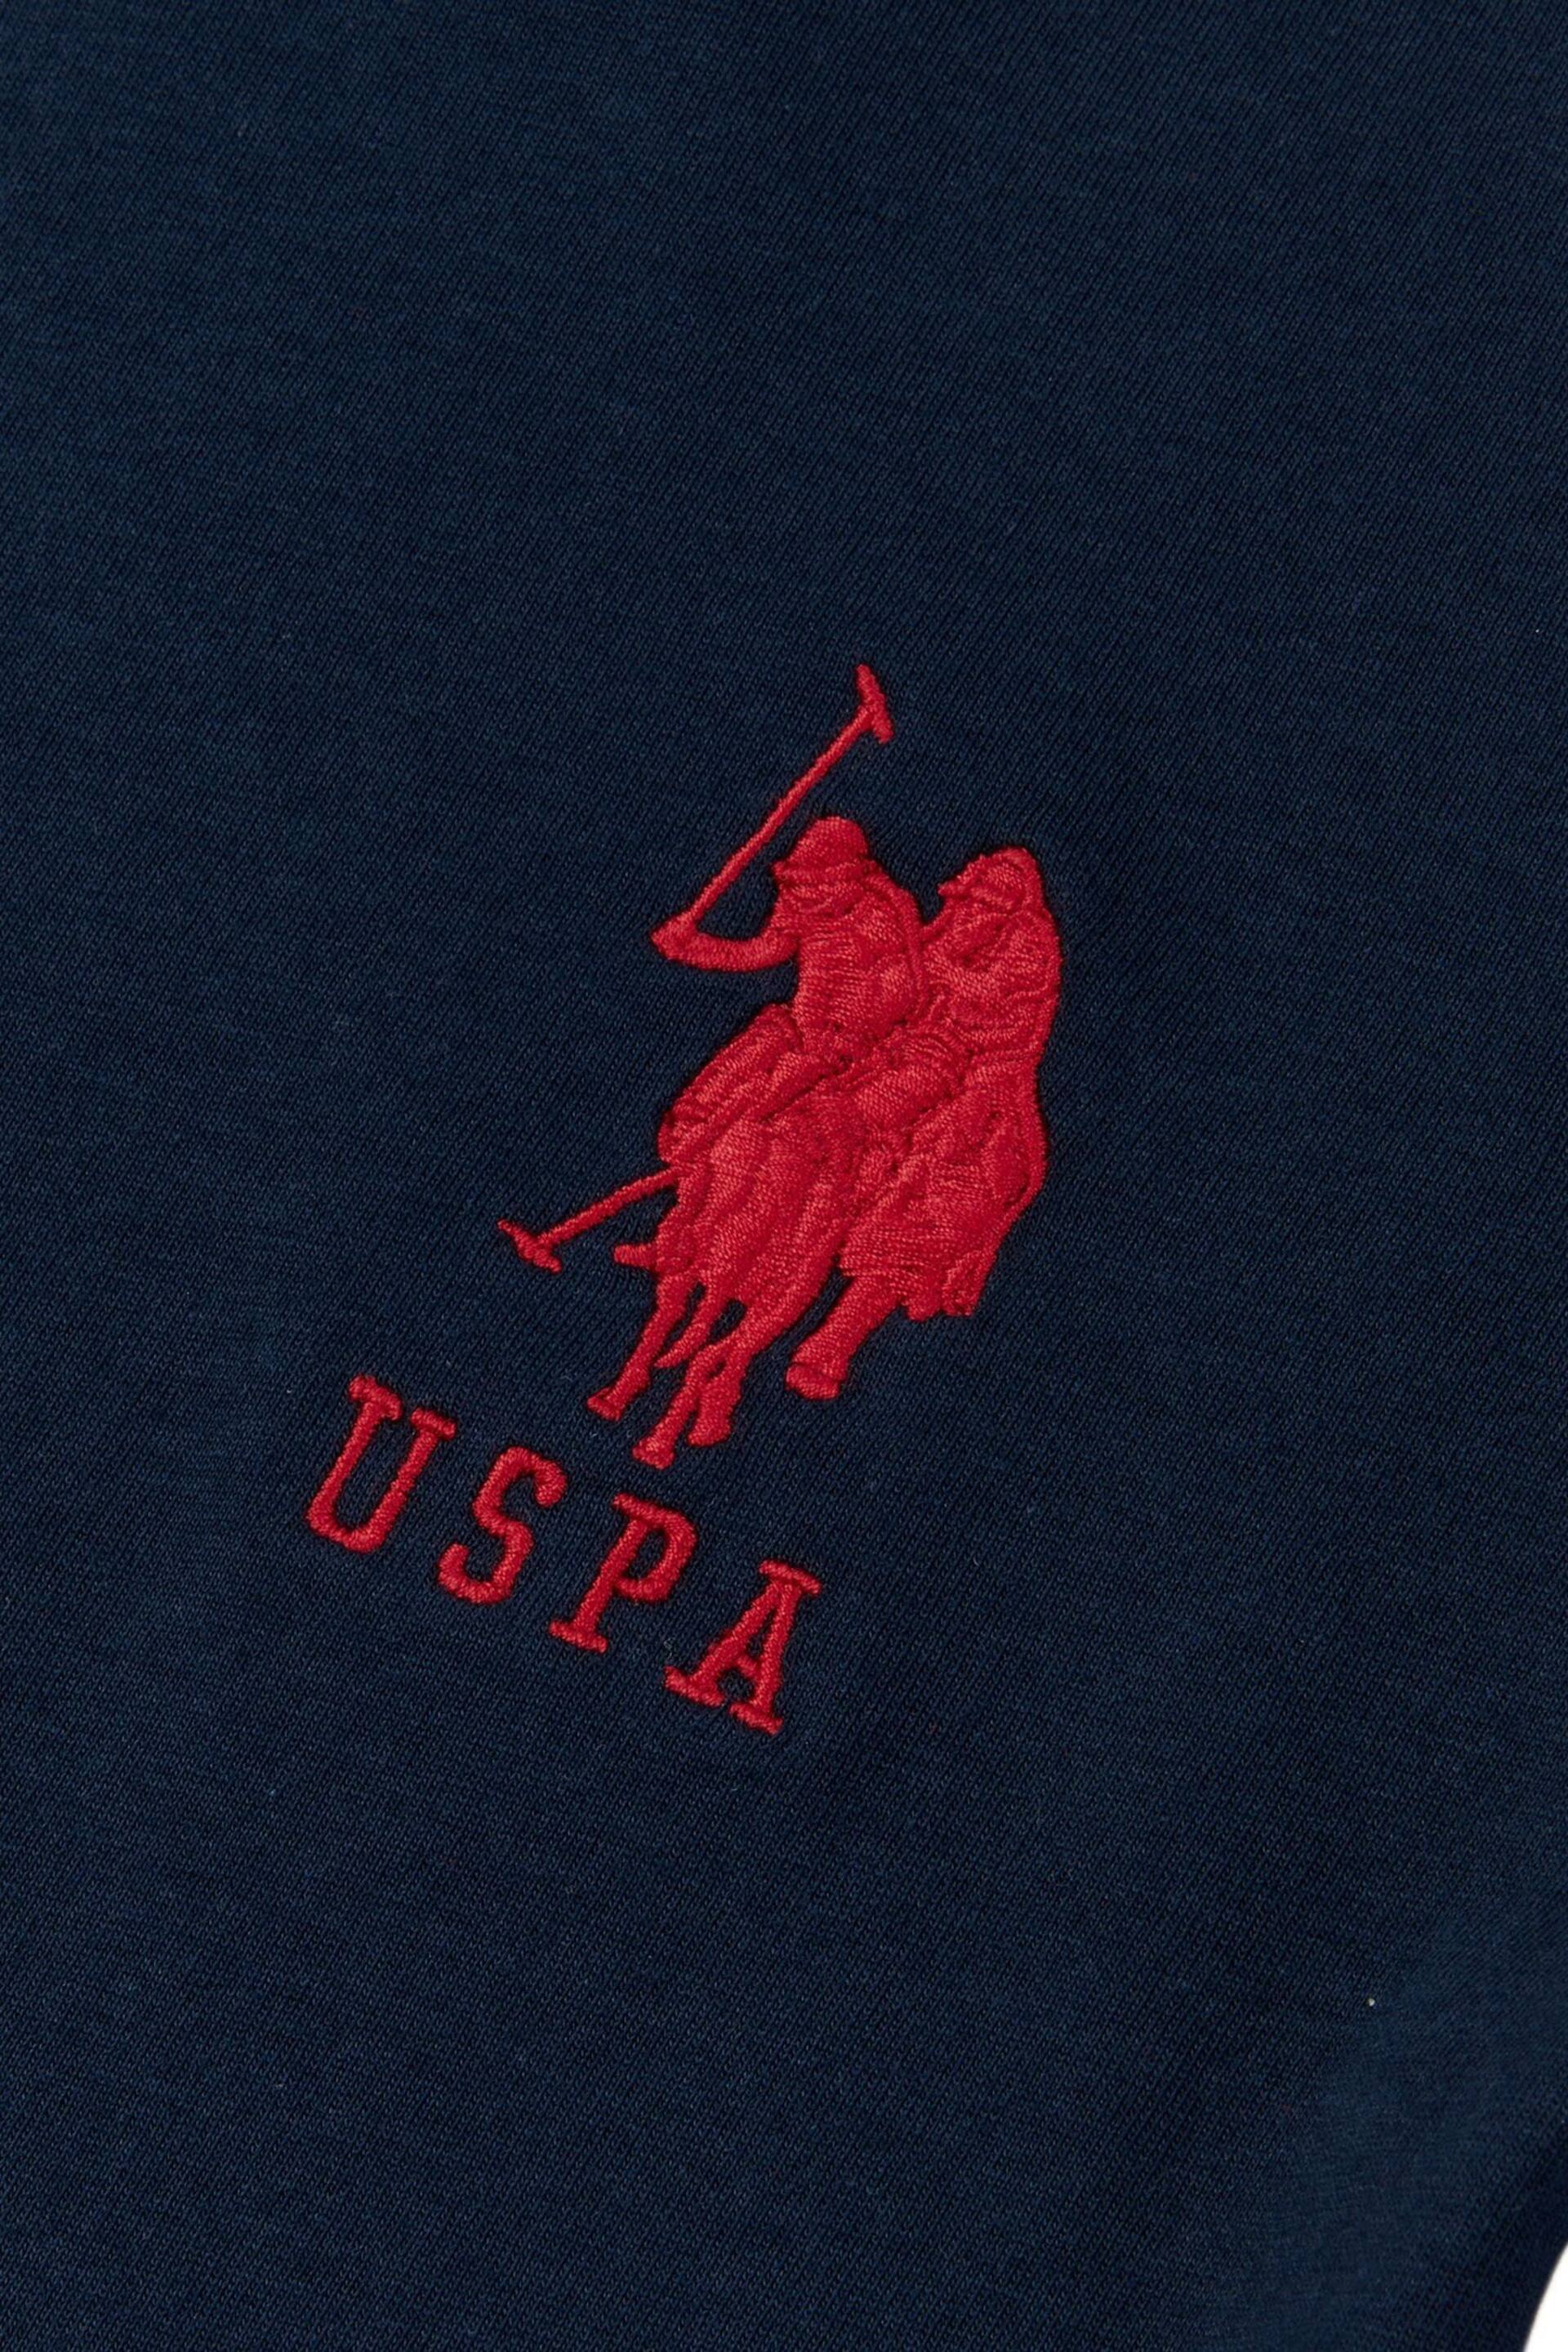 U.S. Polo Assn. Boys Player 3 T-Shirt - Image 8 of 8